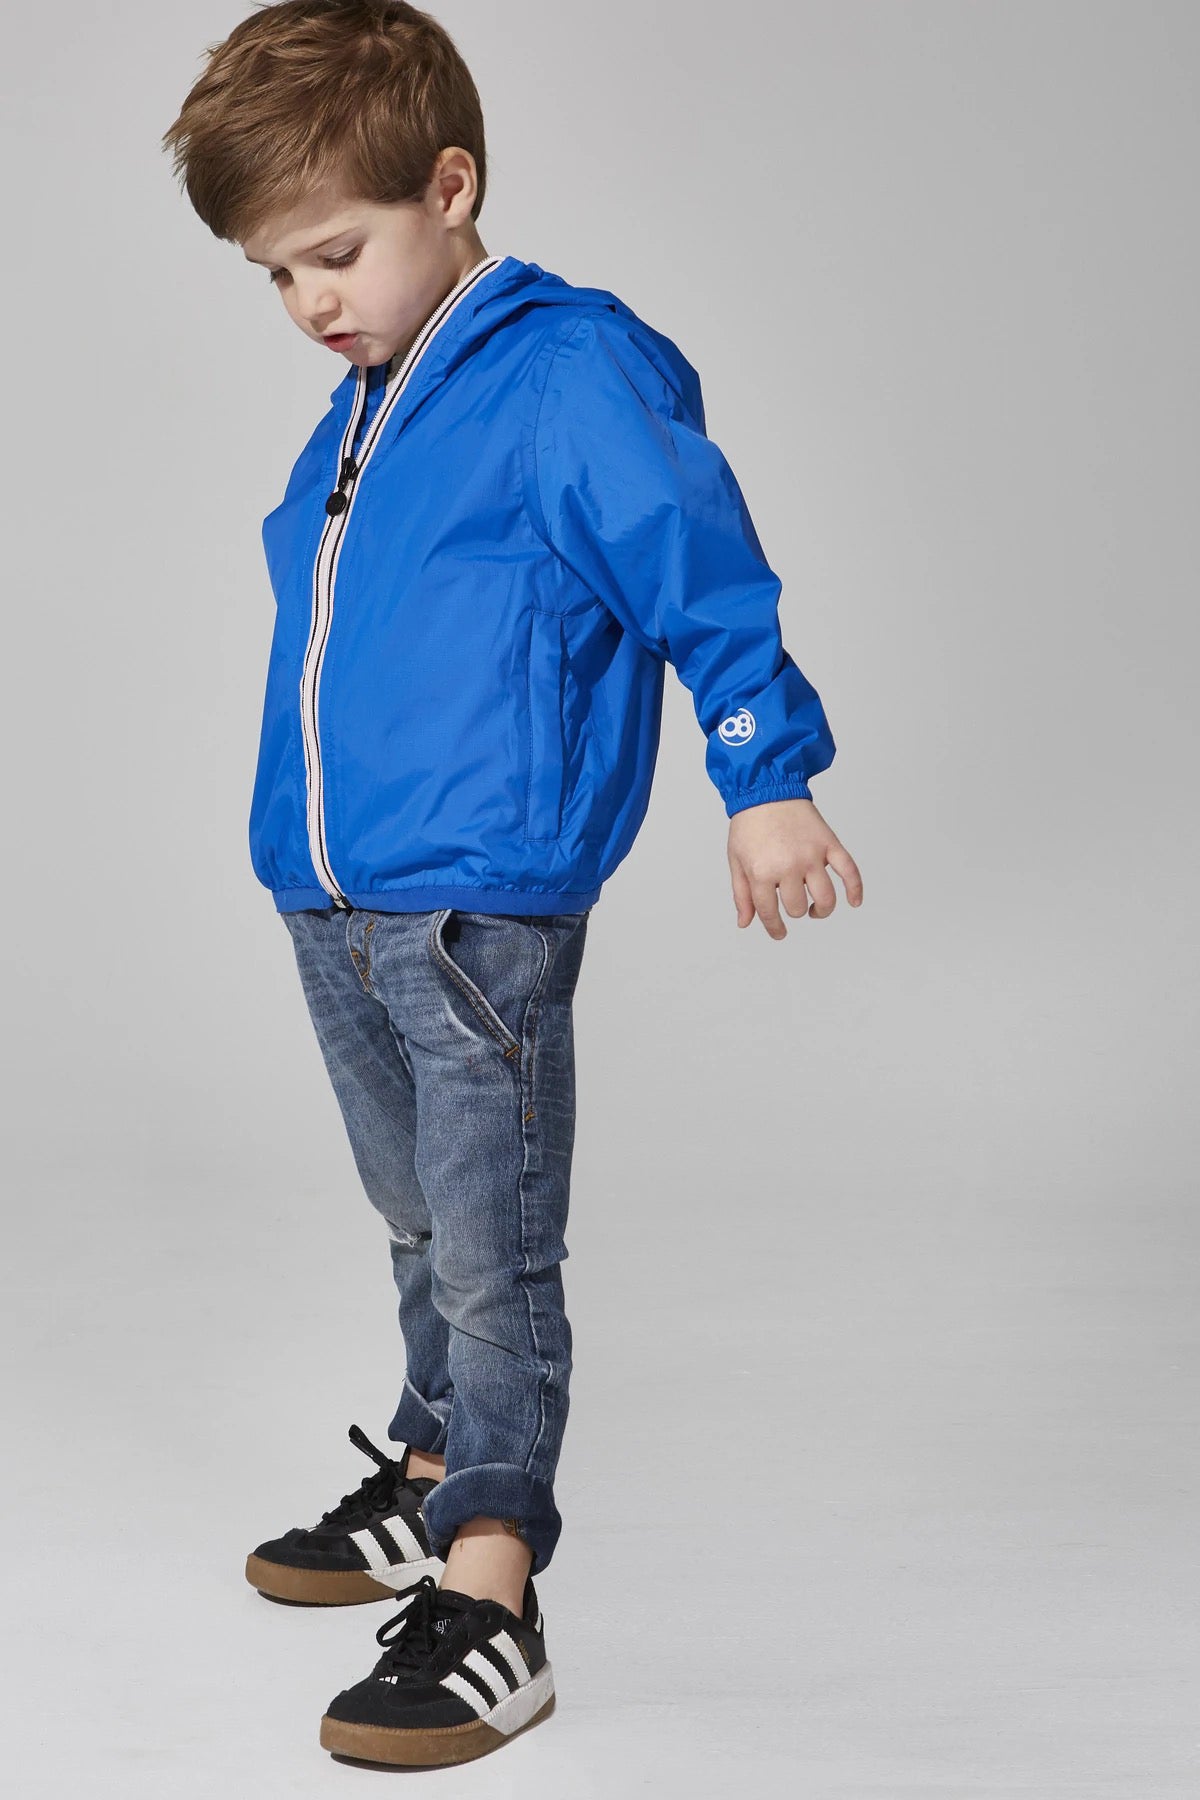 Kids royal blue full zip packable rain jacket and windbreaker - O8Lifestyle